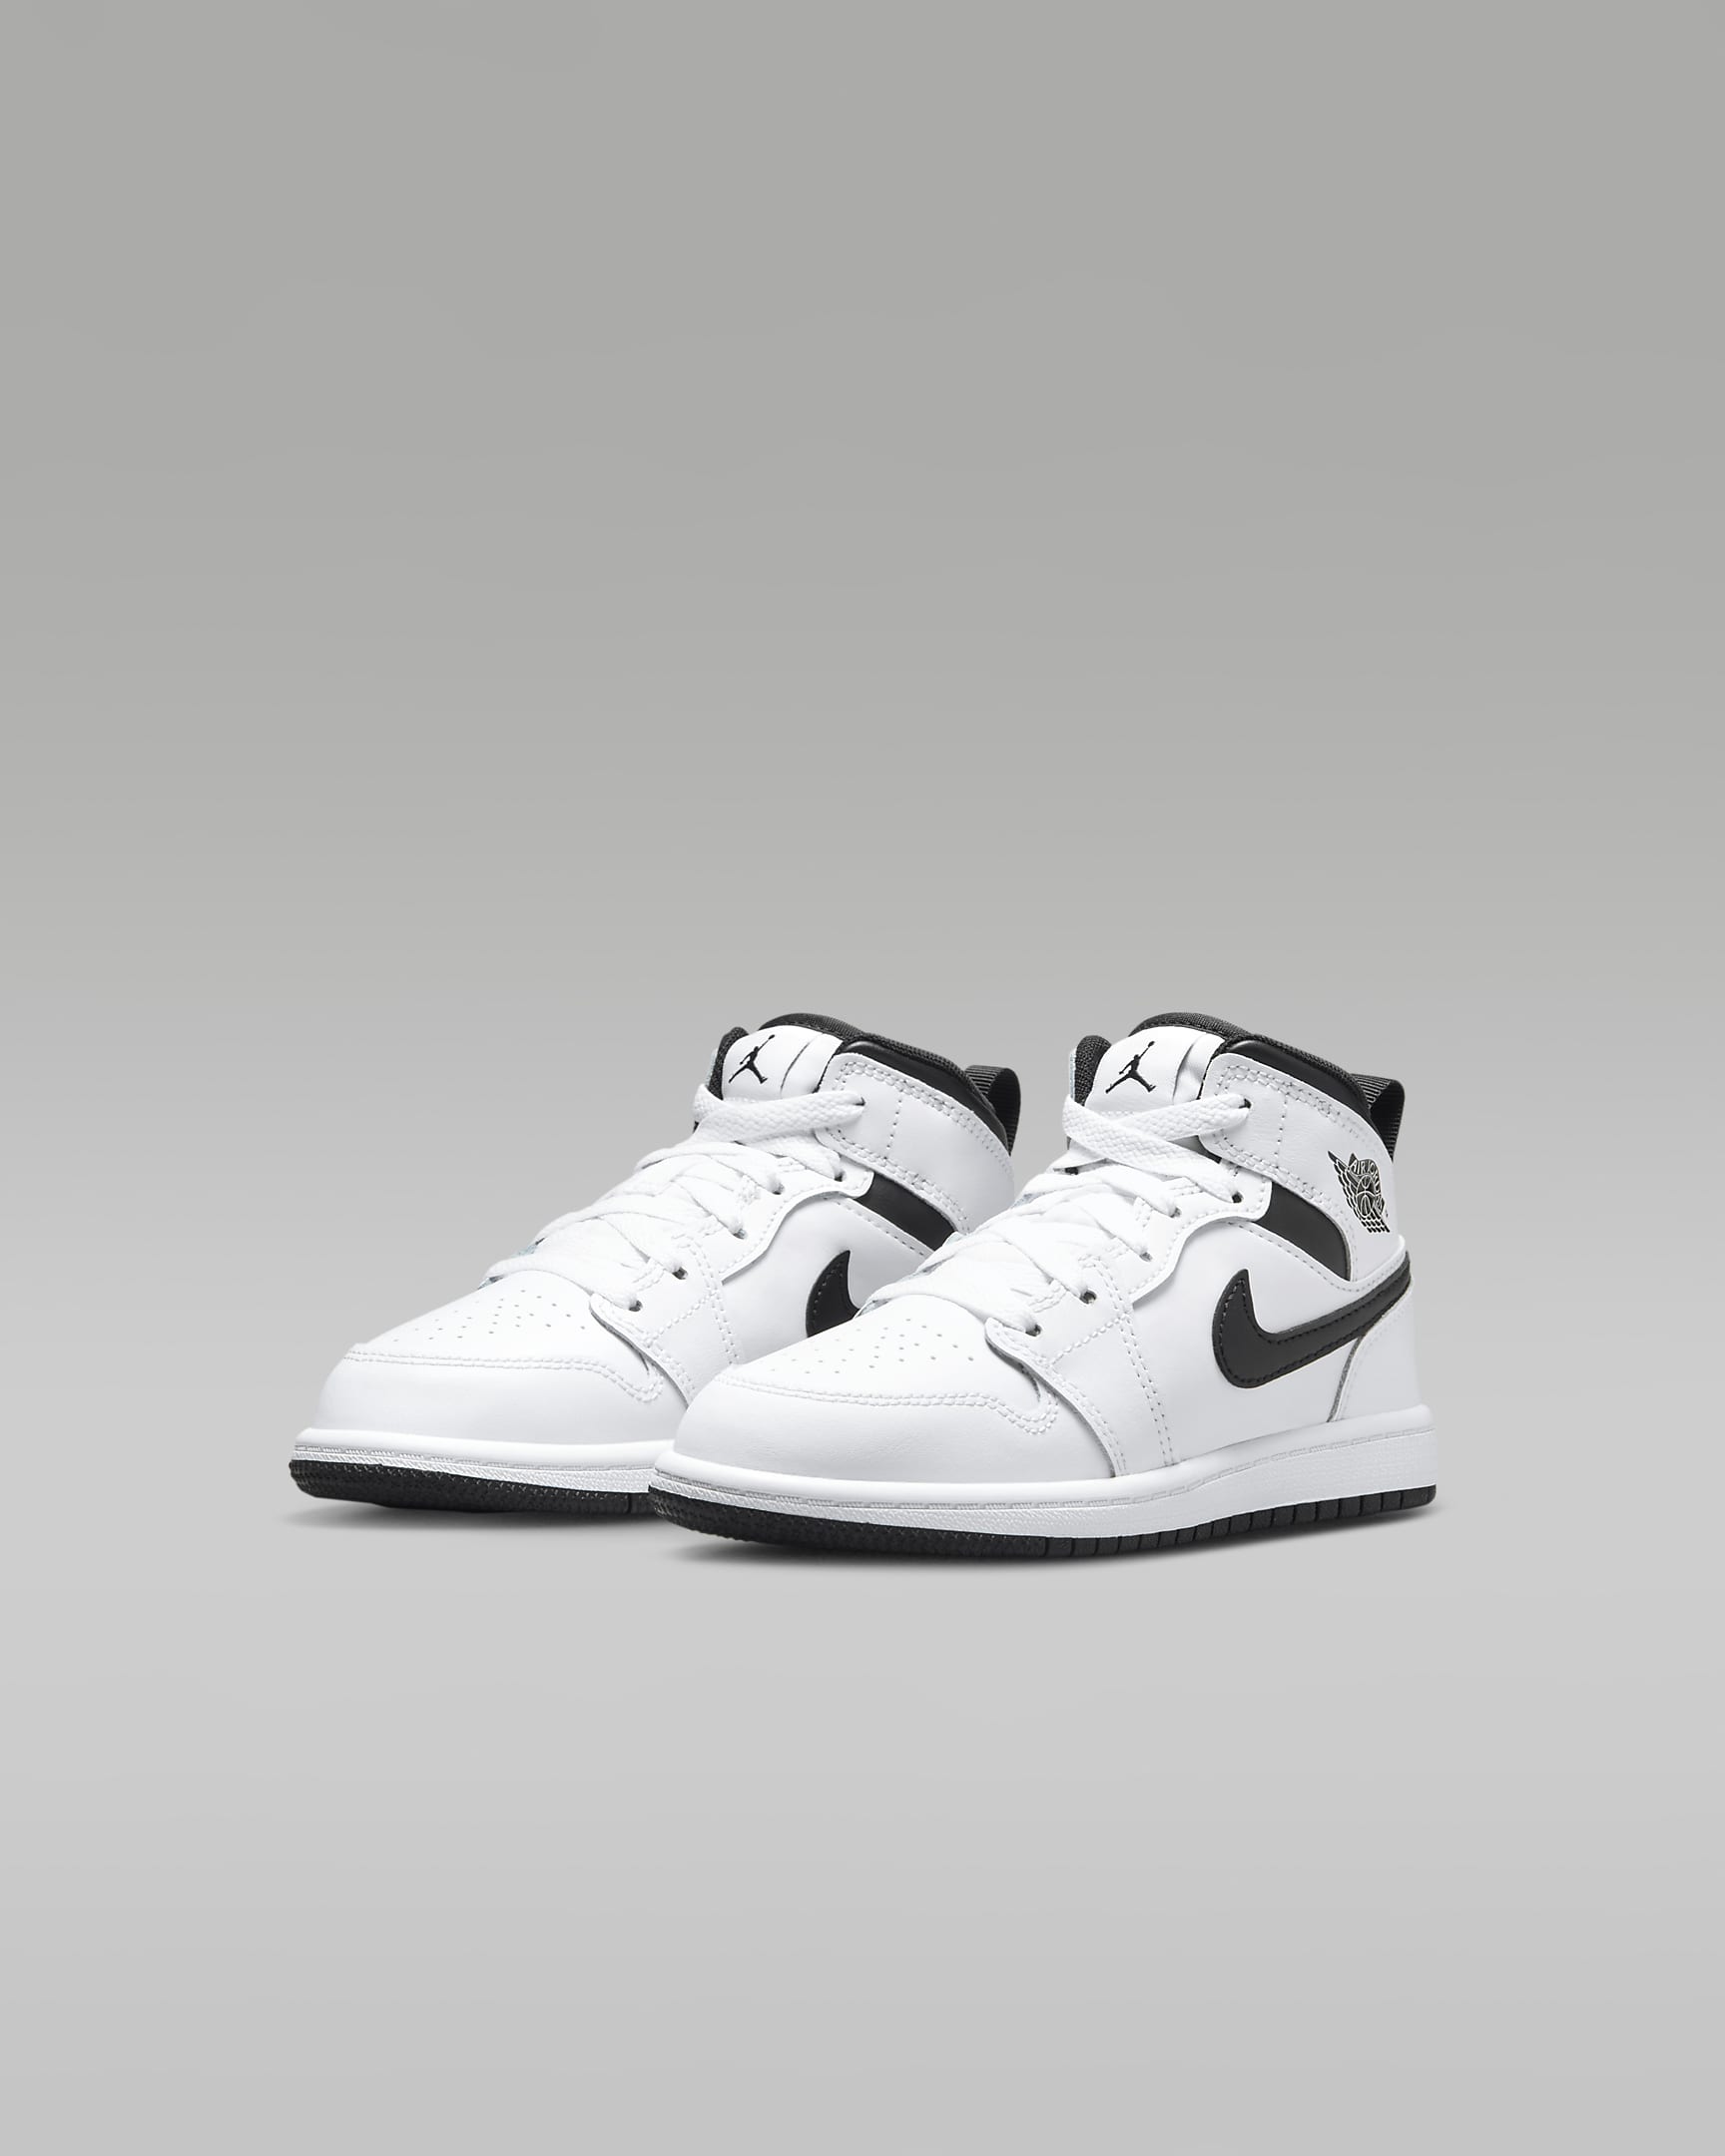 Jordan 1 Mid Little Kids' Shoes - White/White/Black/Black